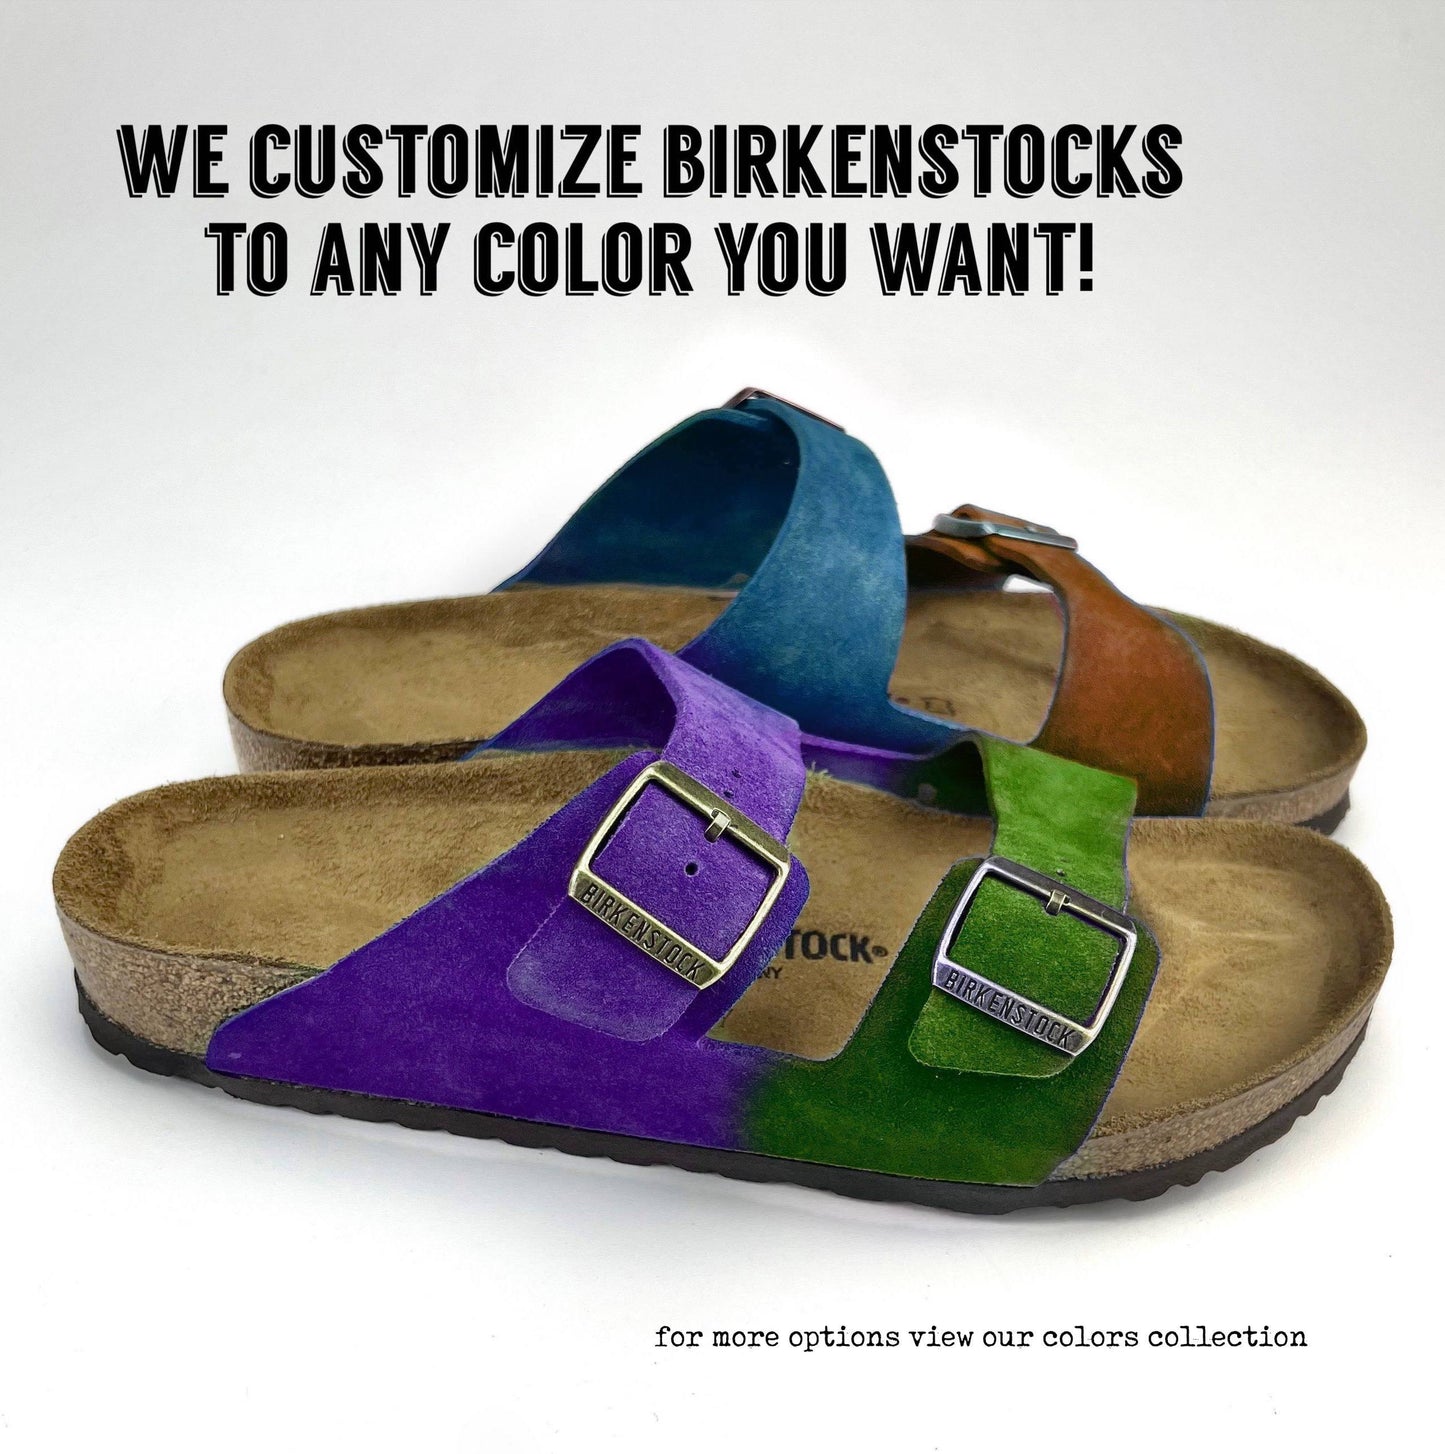 purple, green, orange & blue tie dye leather Birkenstocks with words that say "We customize Birkenstocks"